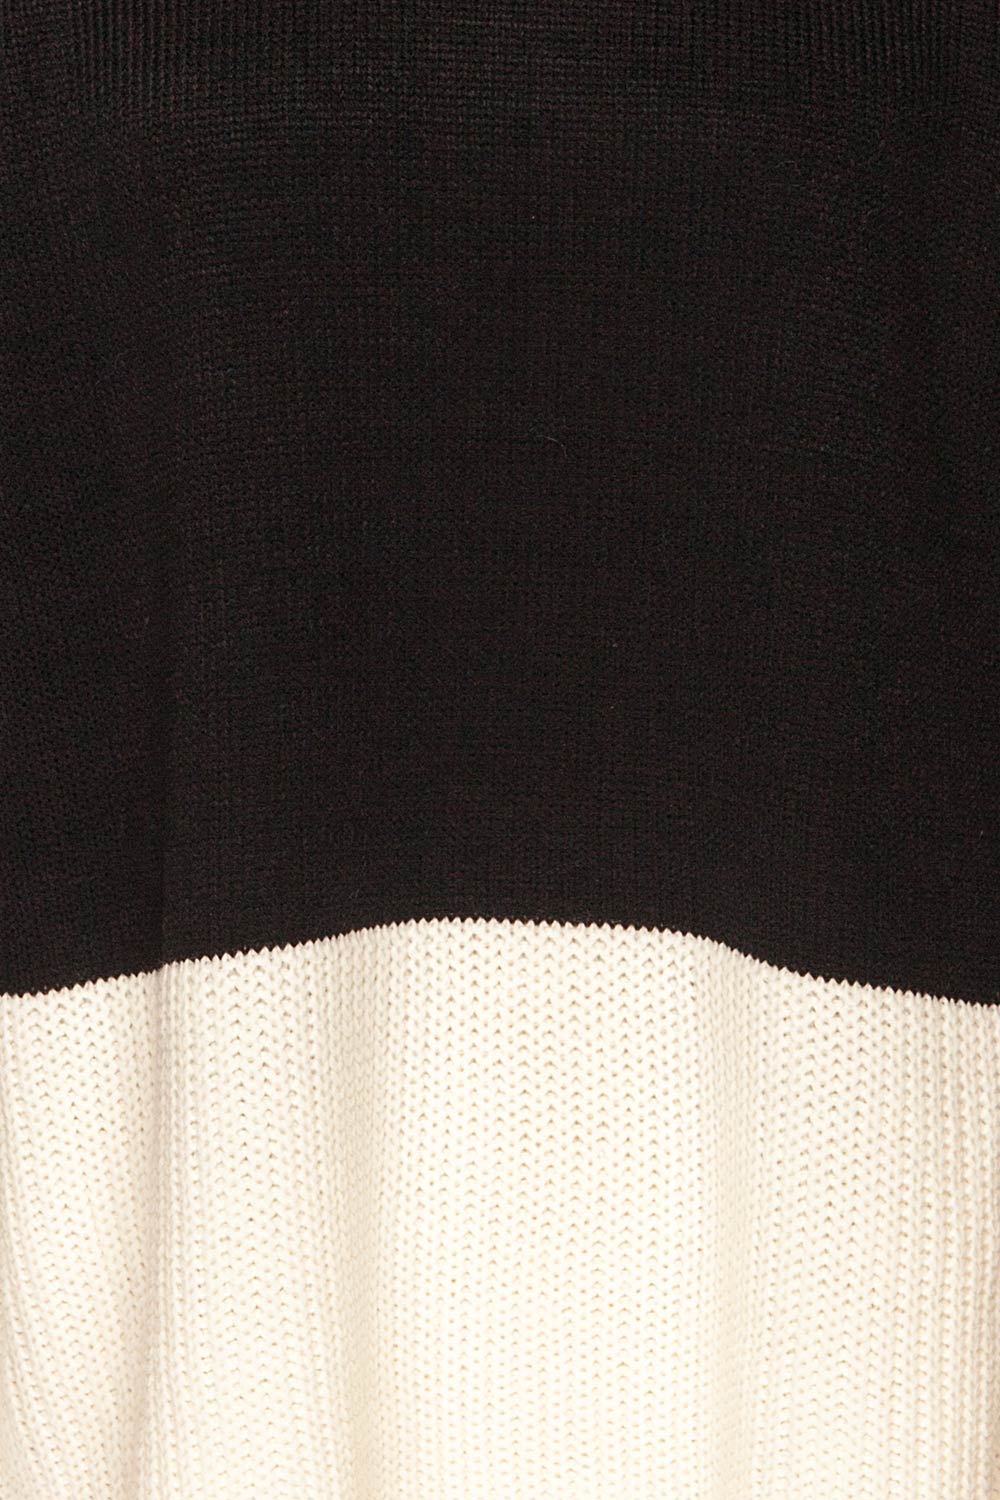 Barisci Black & White Block Knit Sweater fabric detaIl | La Petite Garçonne